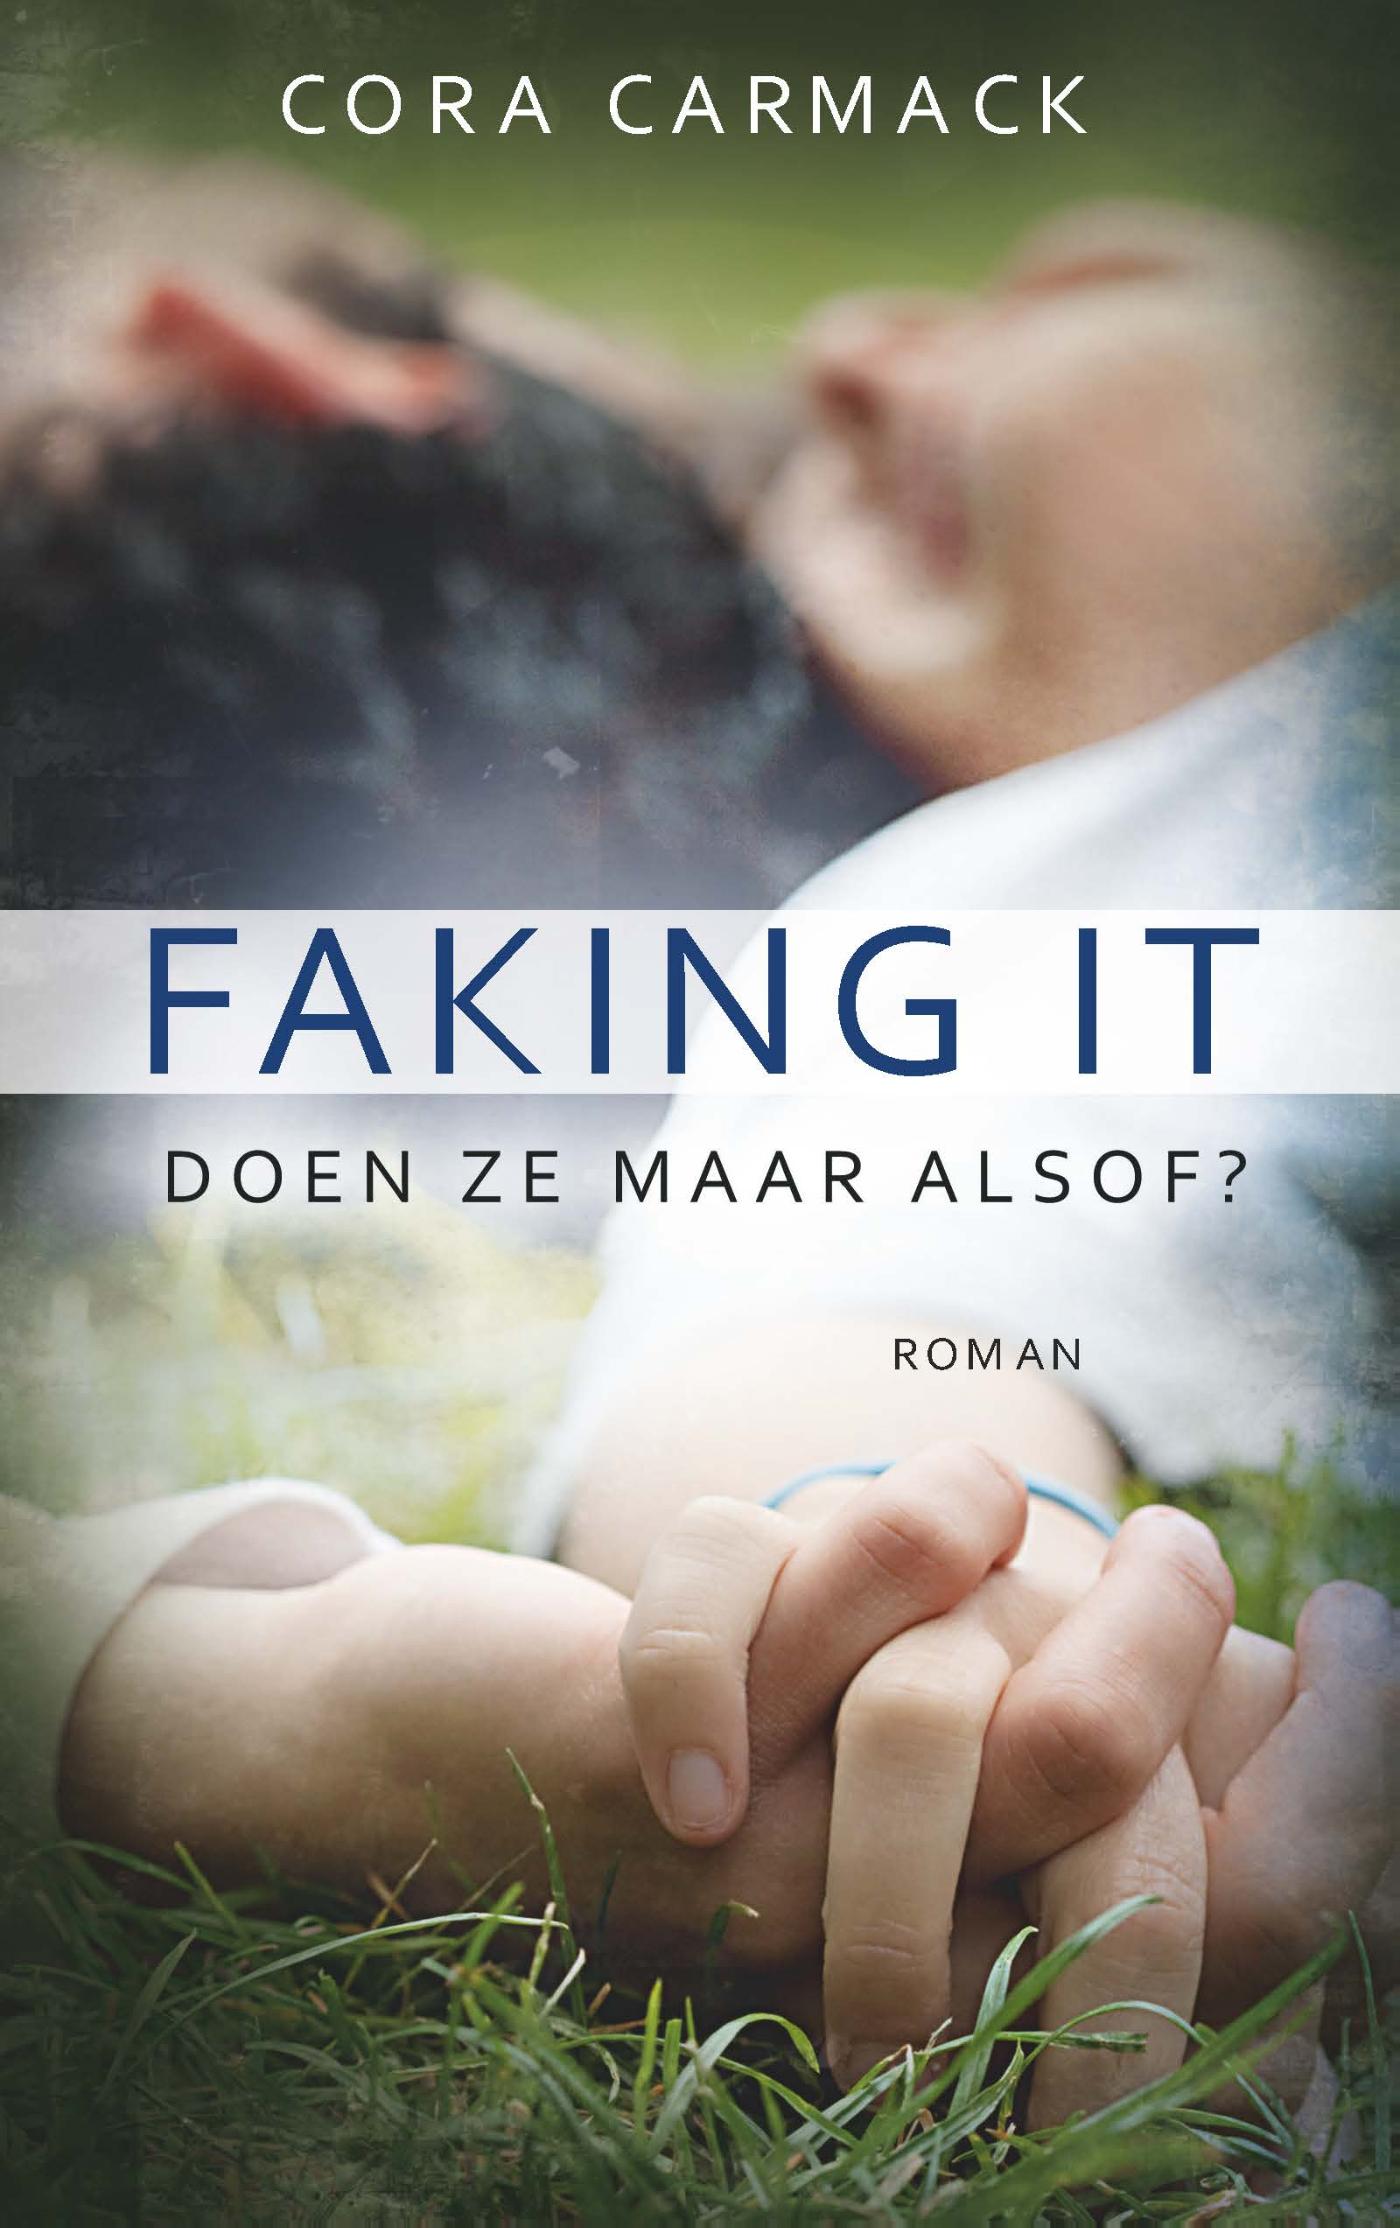 Faking it (Ebook)